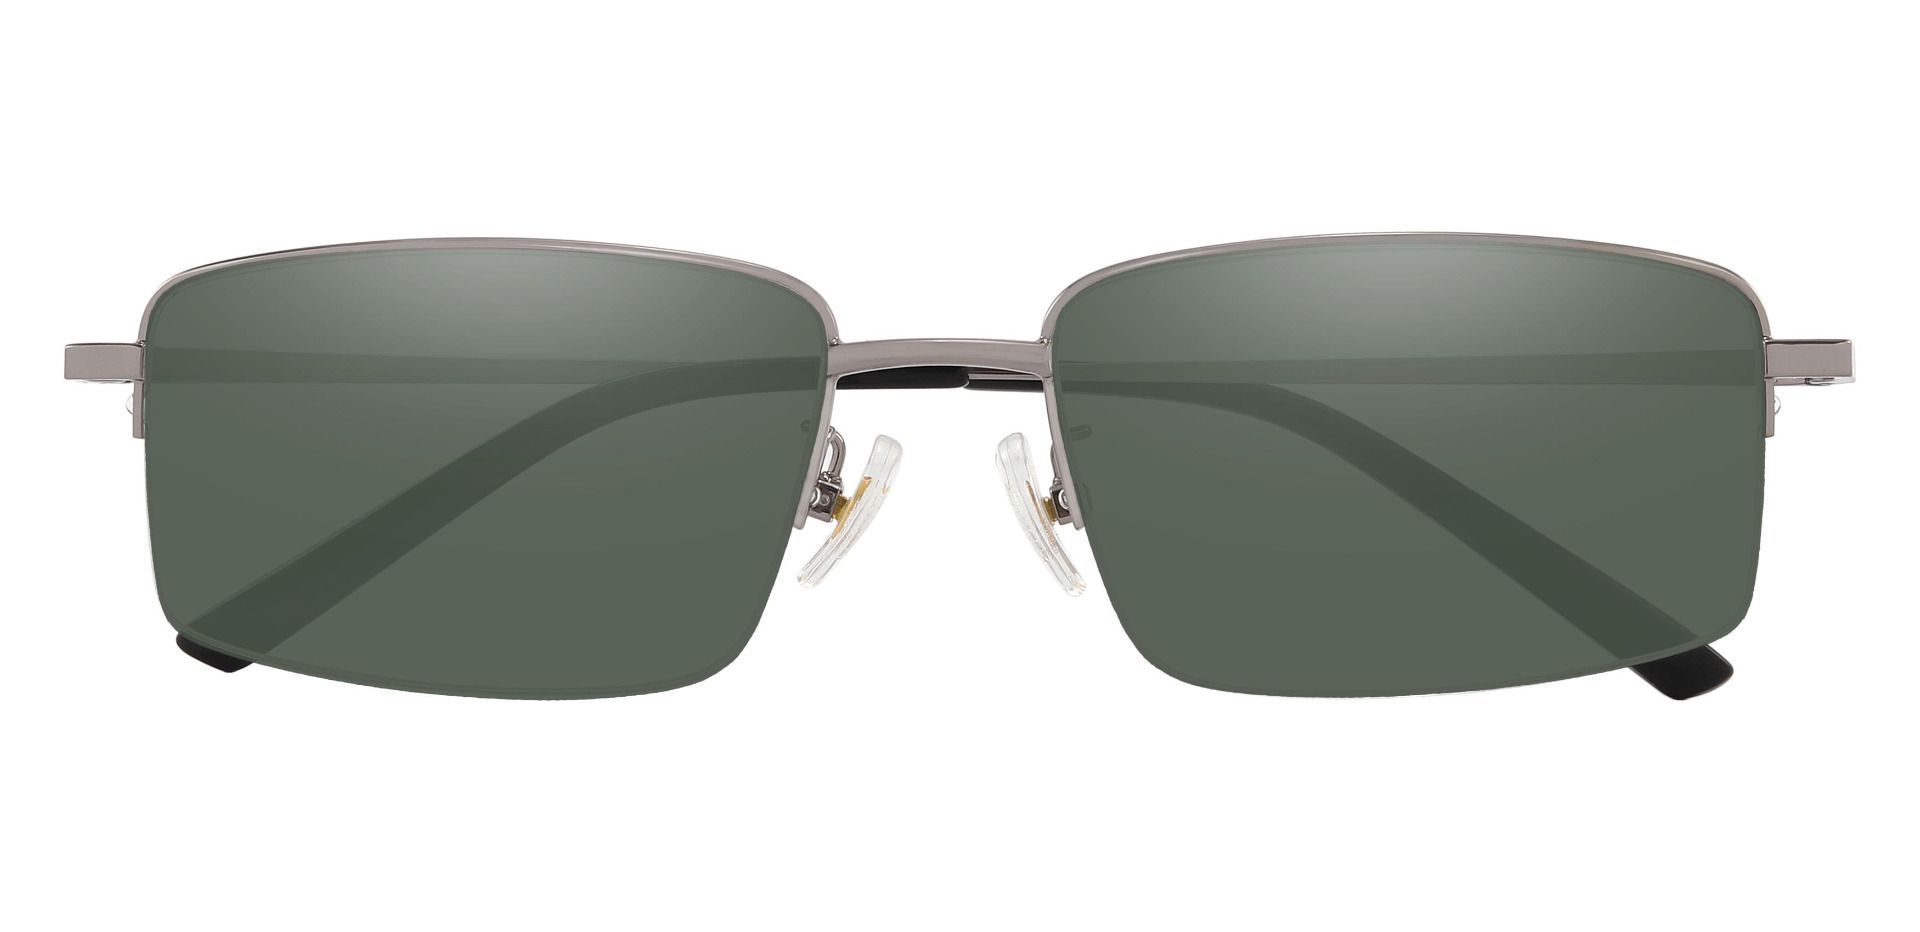 Wayne Rectangle Prescription Sunglasses - Gray Frame With Green Lenses